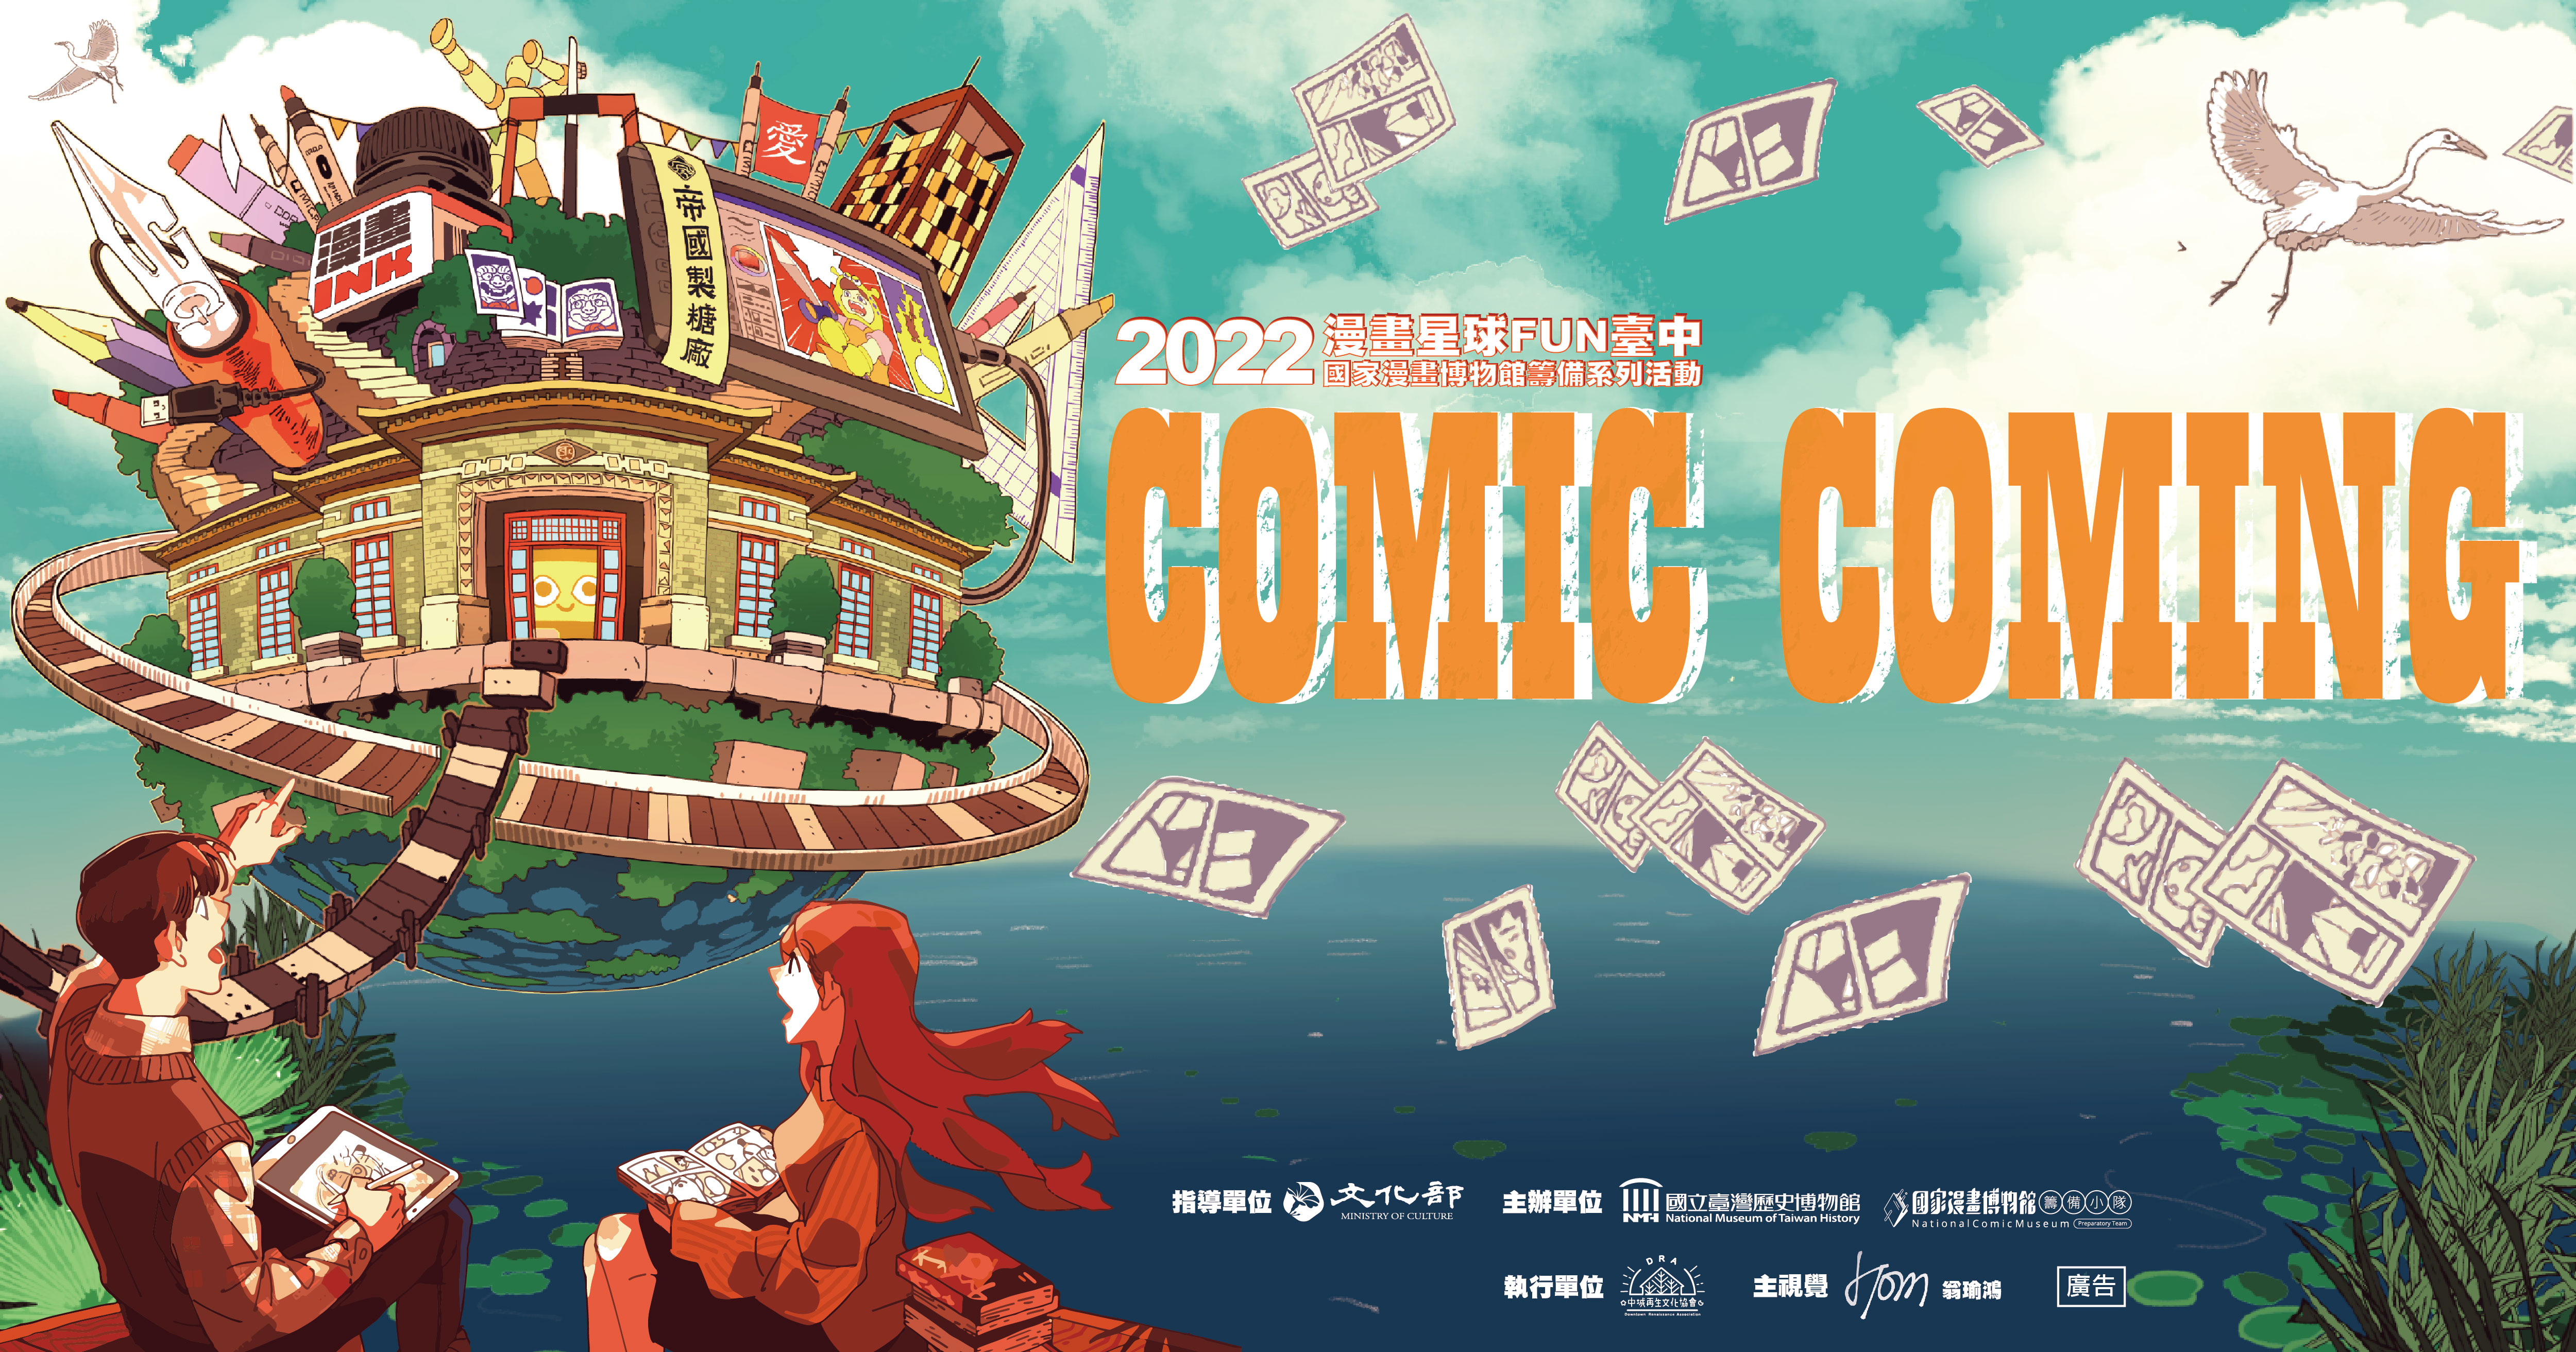 Comic Coming 漫畫星球FUN臺中—2022 國家漫畫博物館籌備系列活動